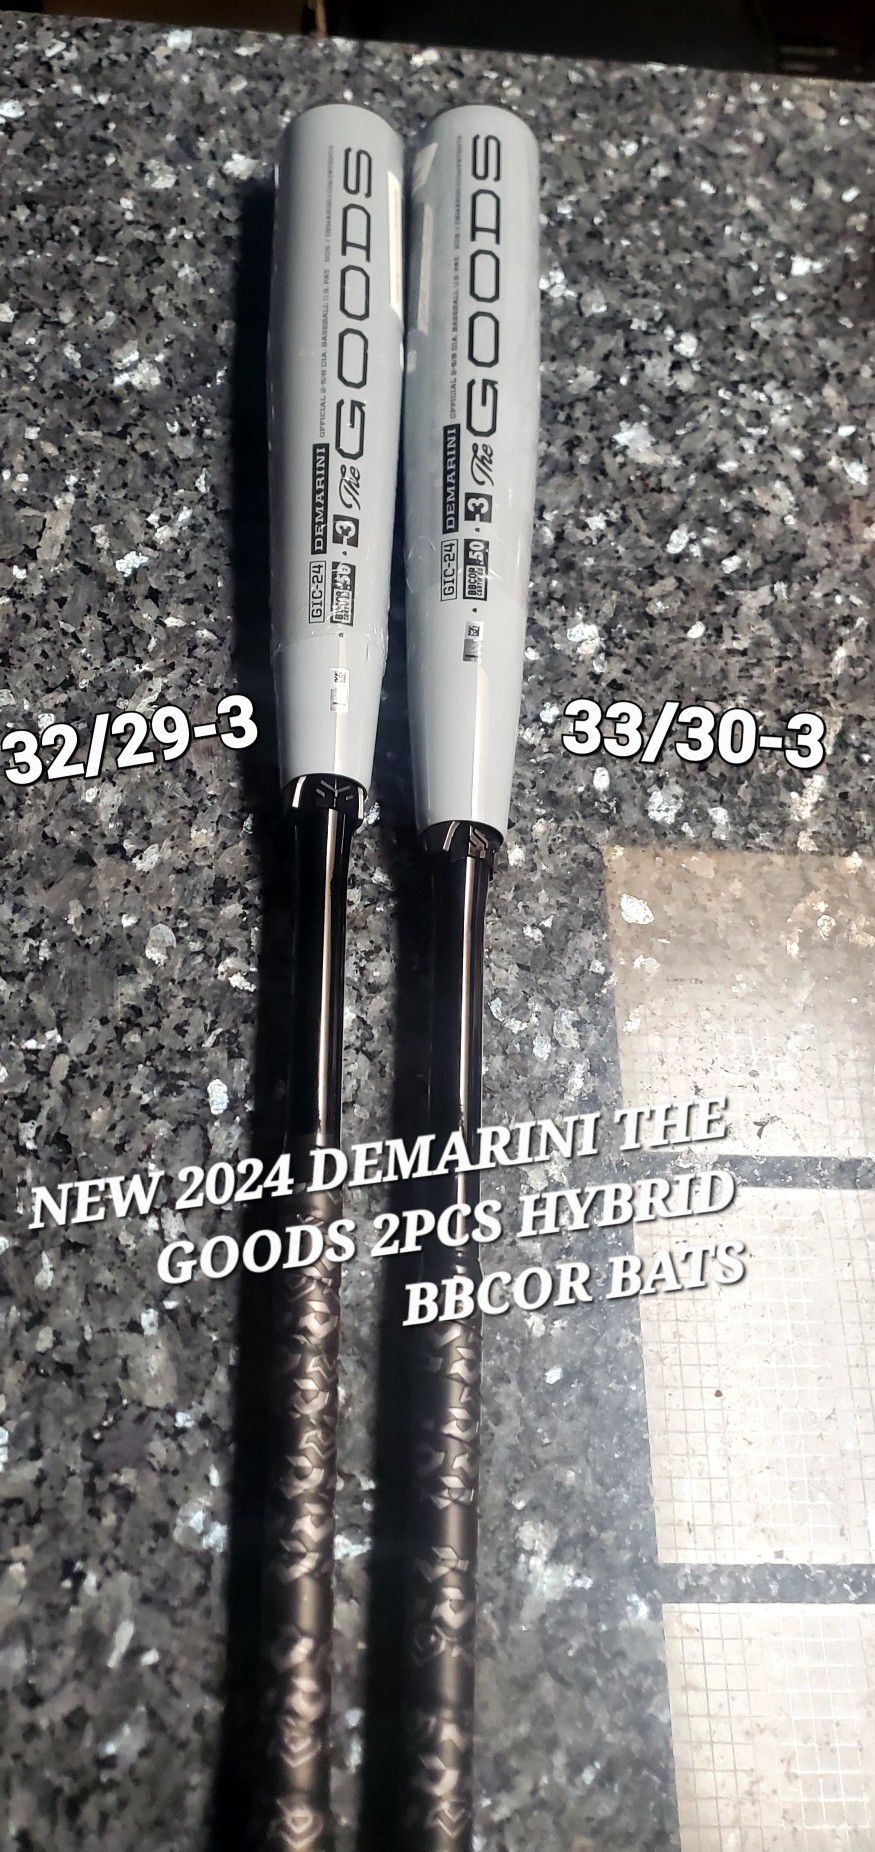 HOT NEW 2024 2PCS HYBRID DEMARINI THE GOODS BBCOR BATS 32&33 -3